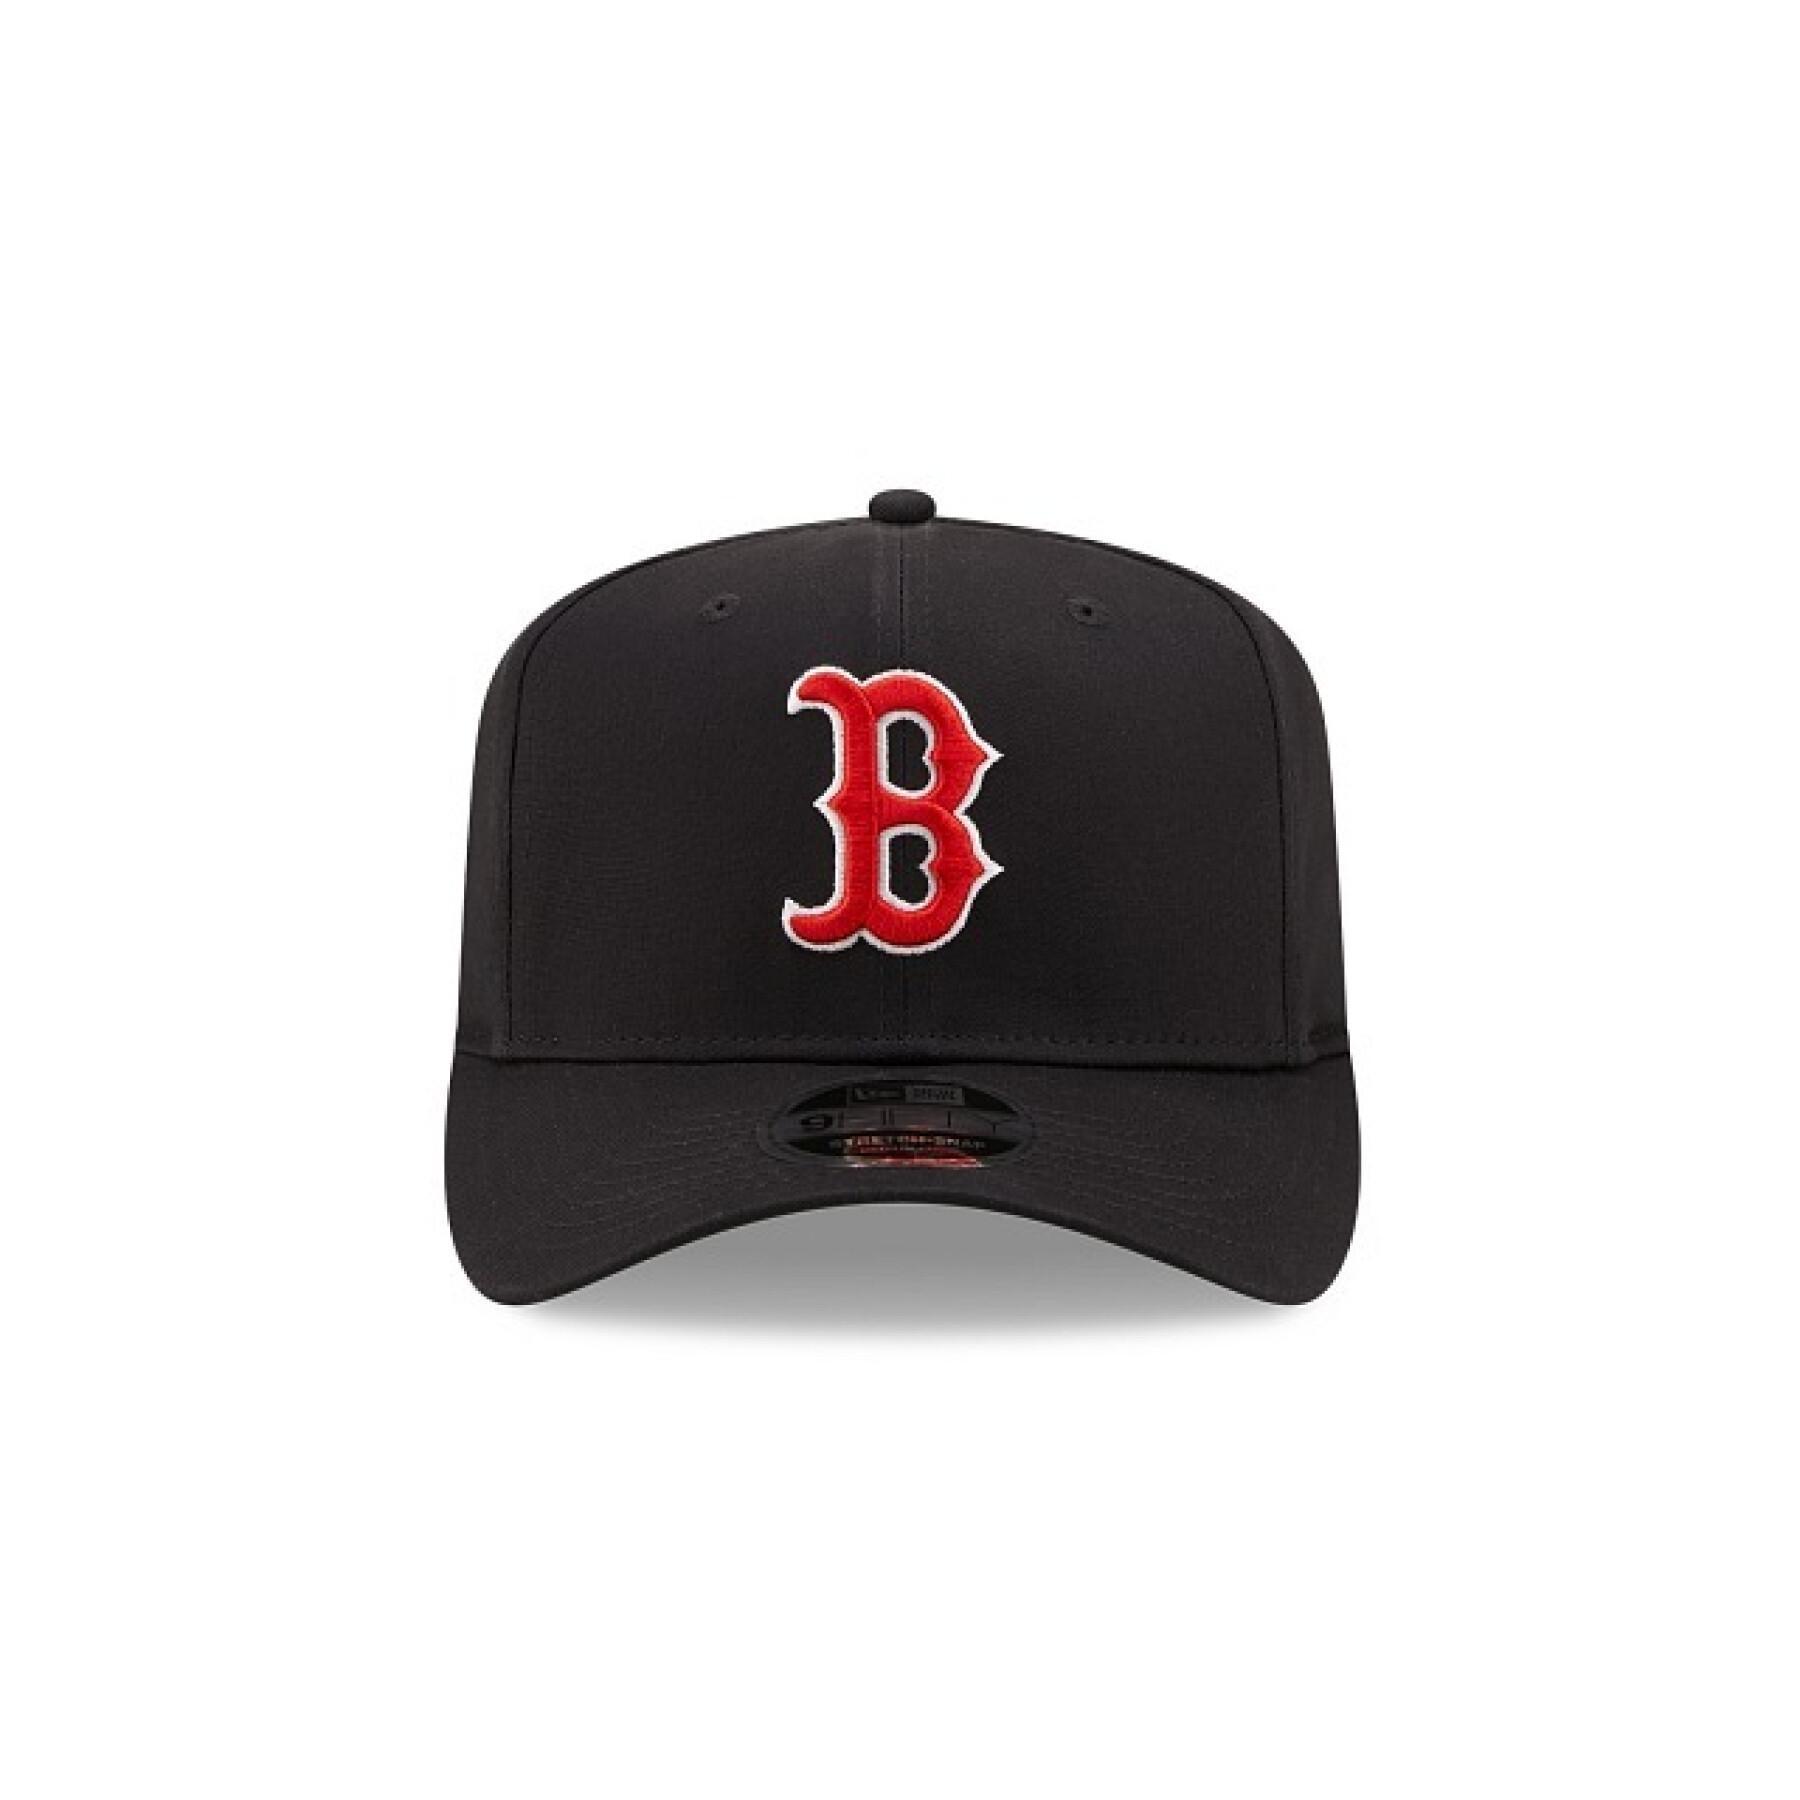 Gorra 9fifty Boston Red Sox